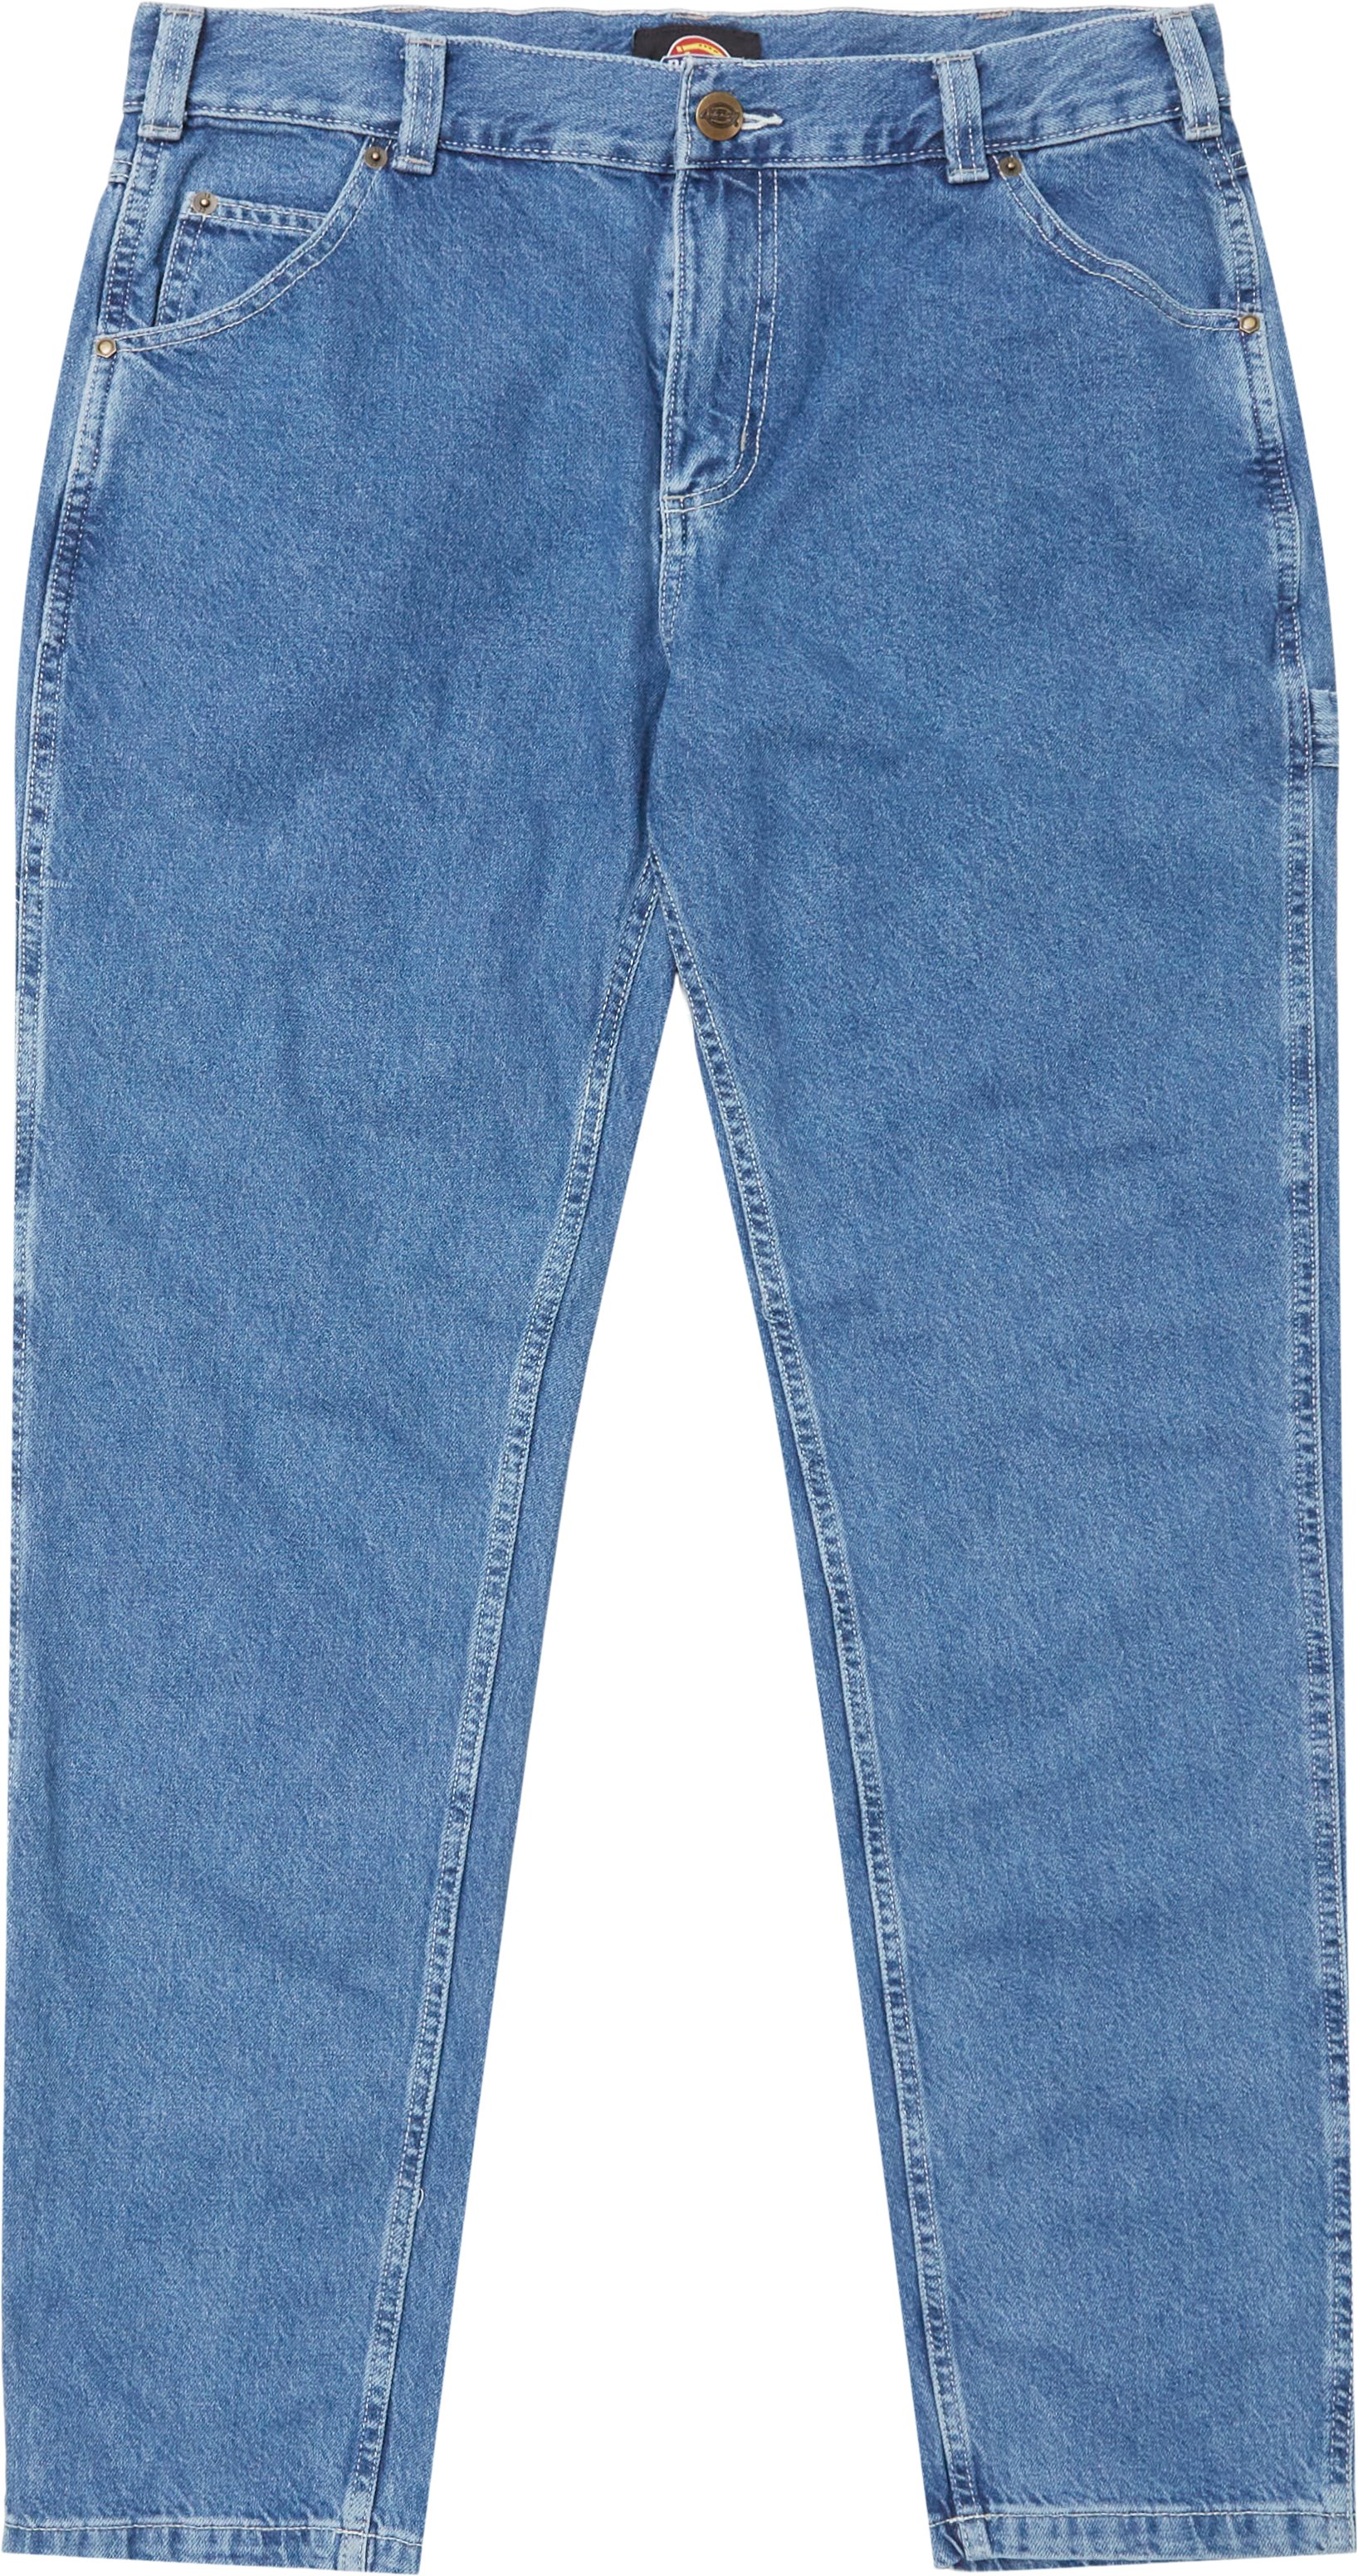 Garyville Jeans - Jeans - Regular fit - Denim